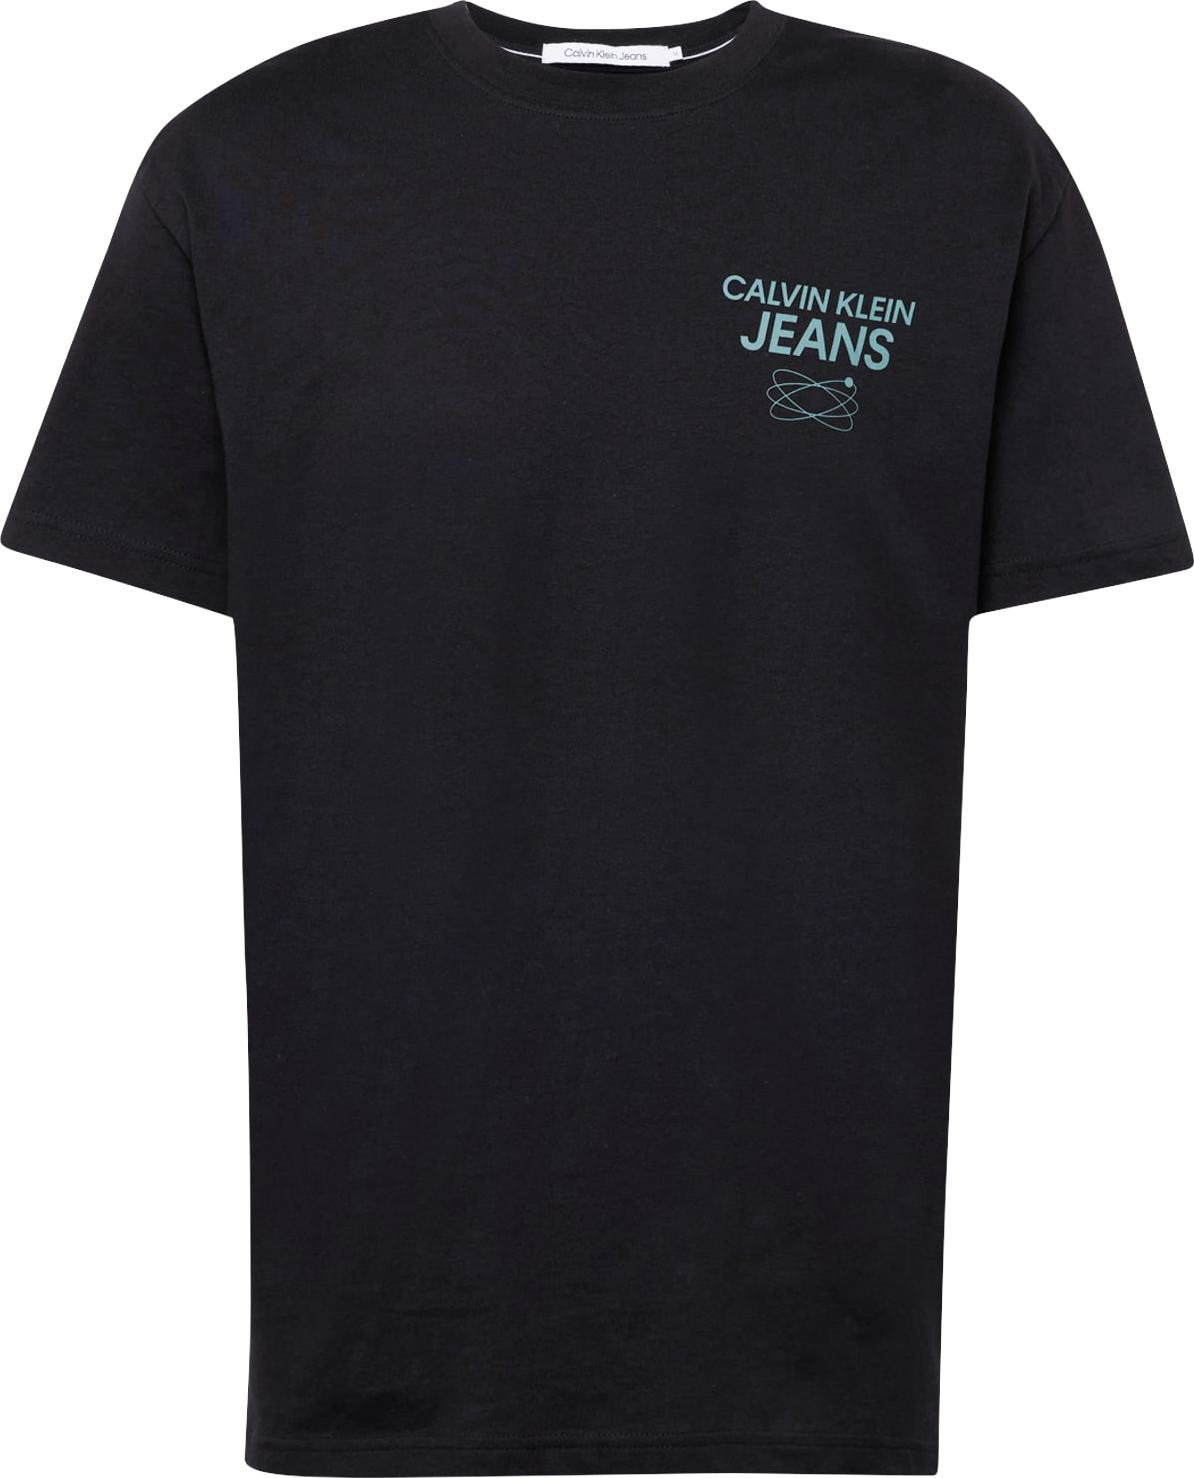 Tričko Calvin Klein Jeans opálová / černá